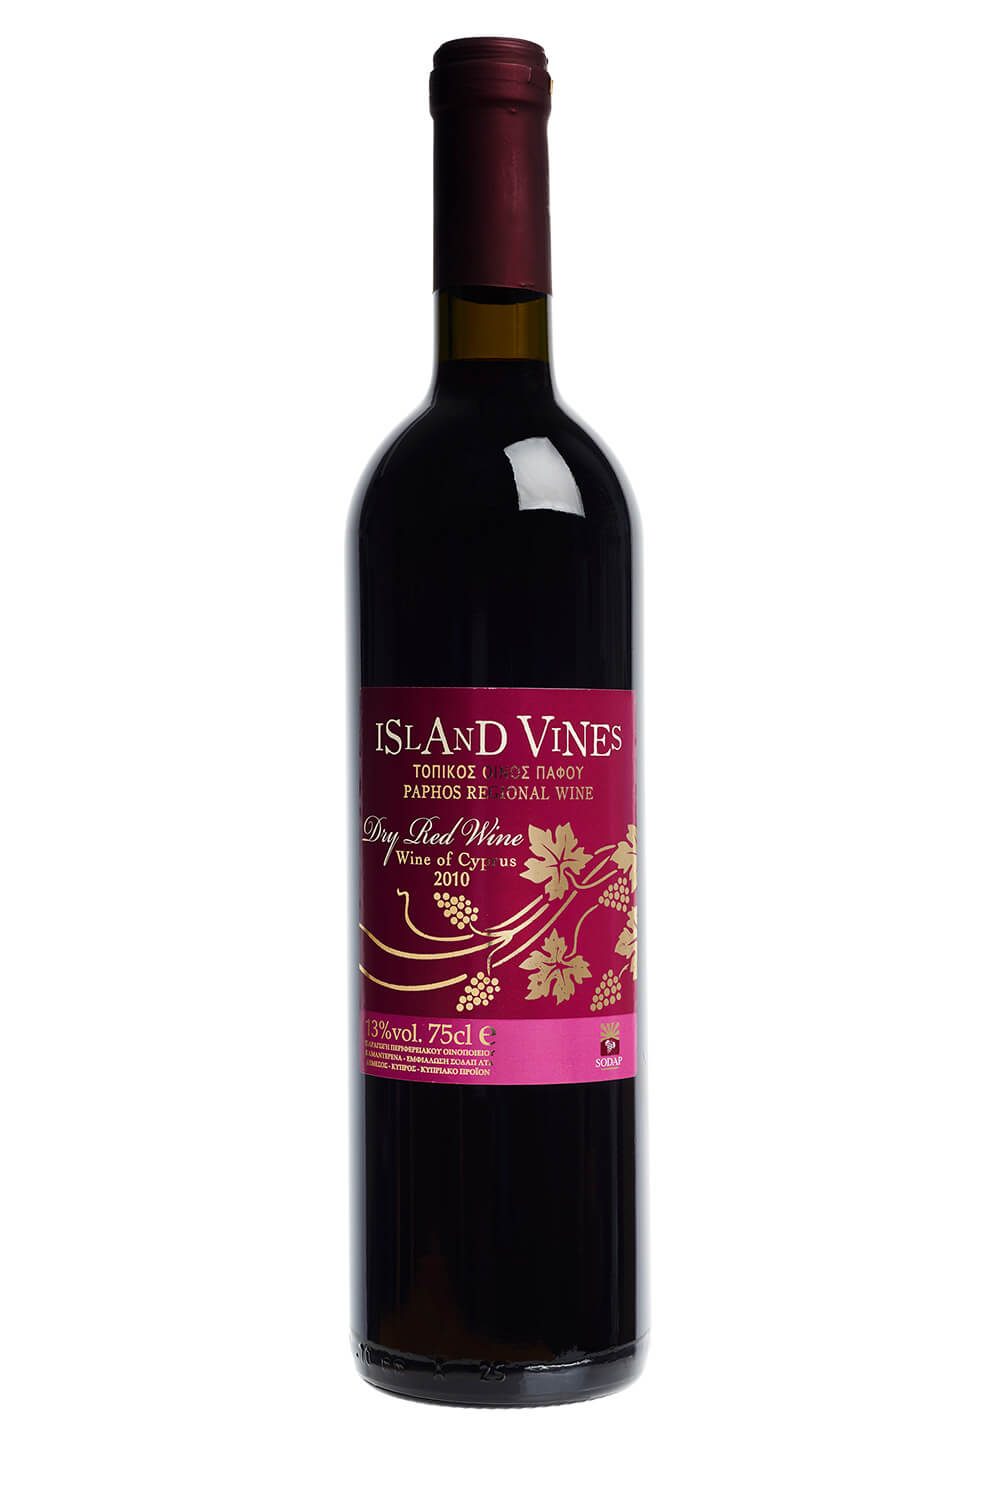  Island Vines red